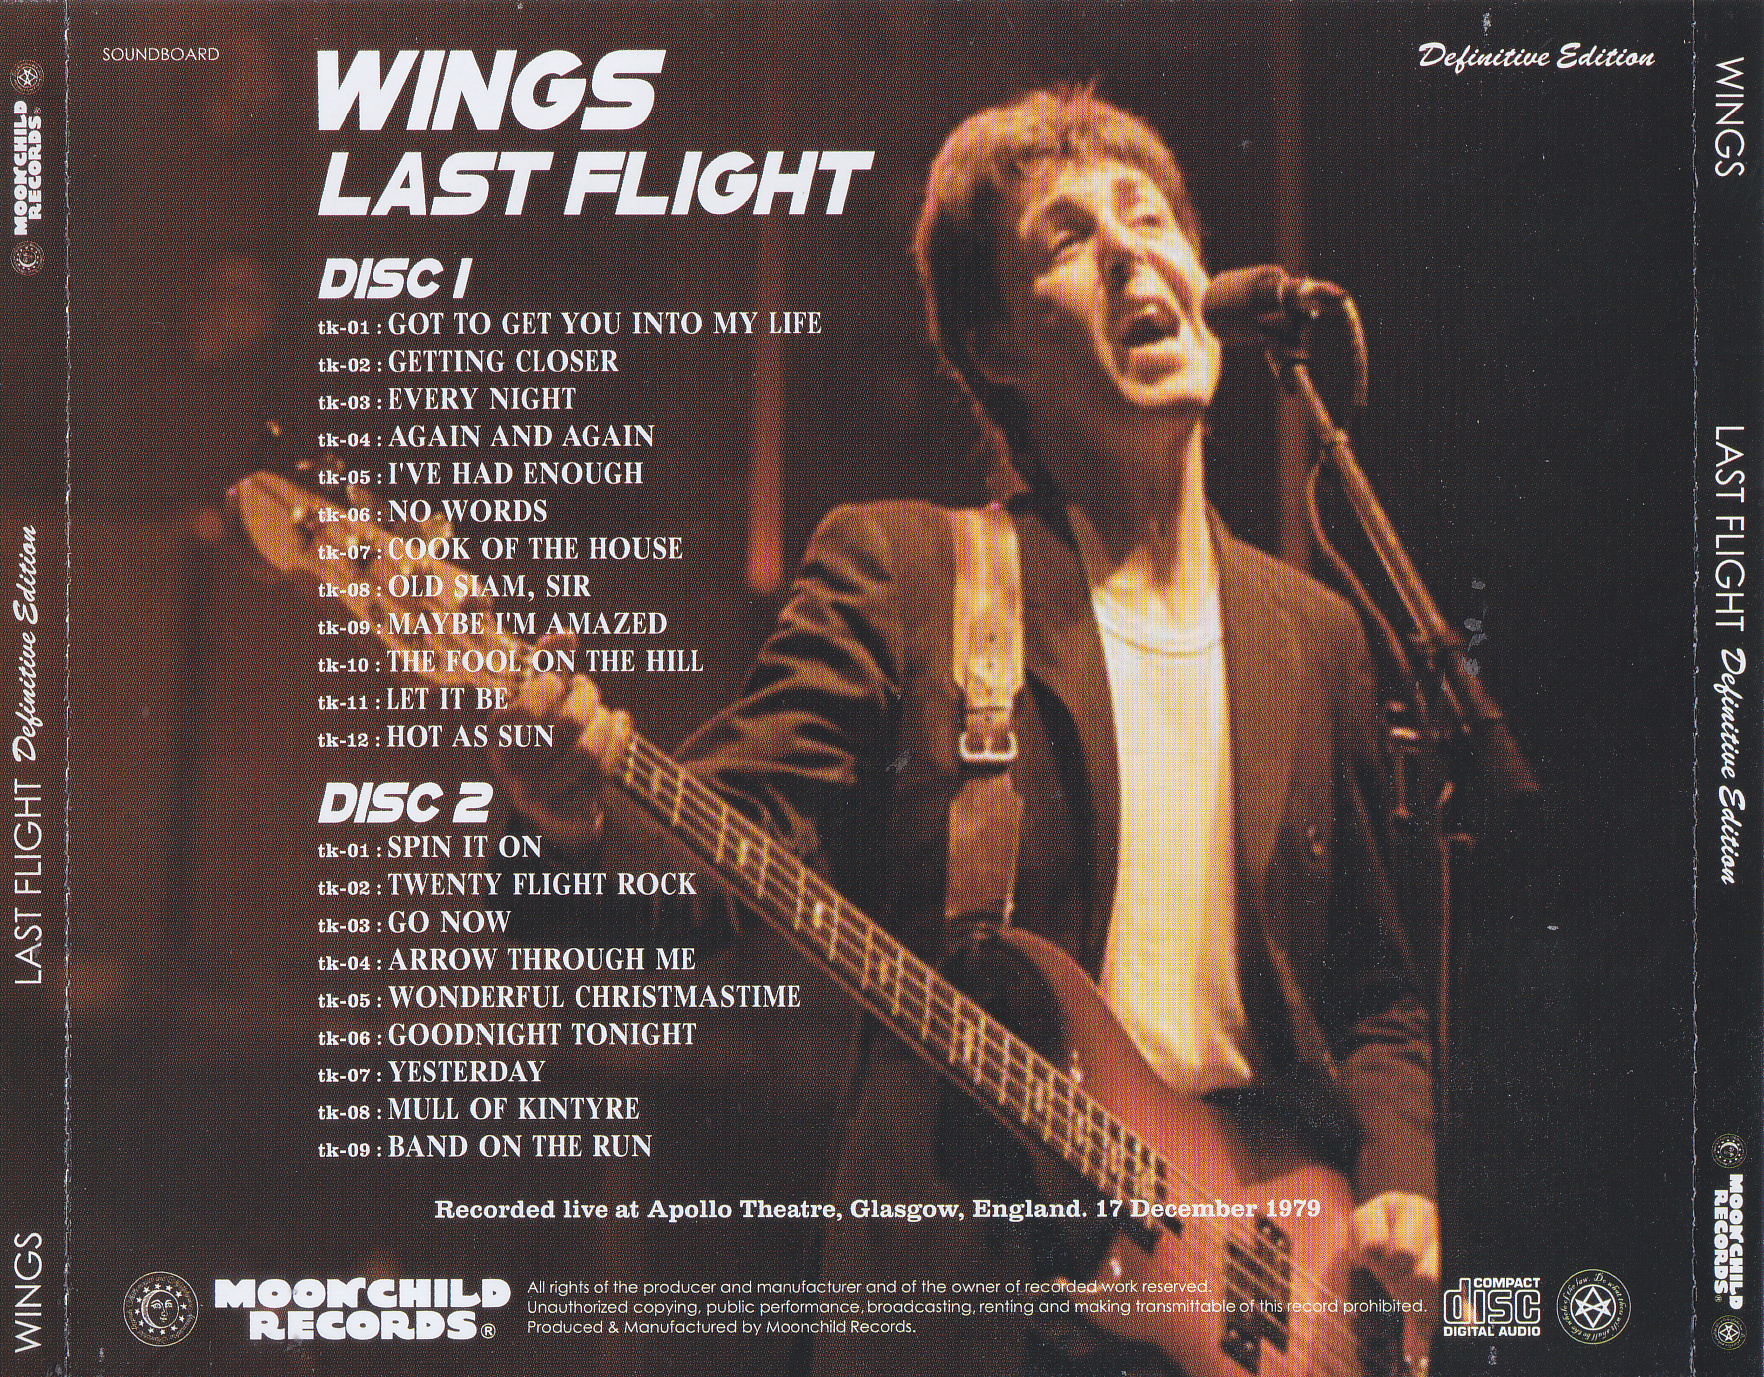 Paul McCartney & Wings / Last Flight Definitive Edition / 2CD 